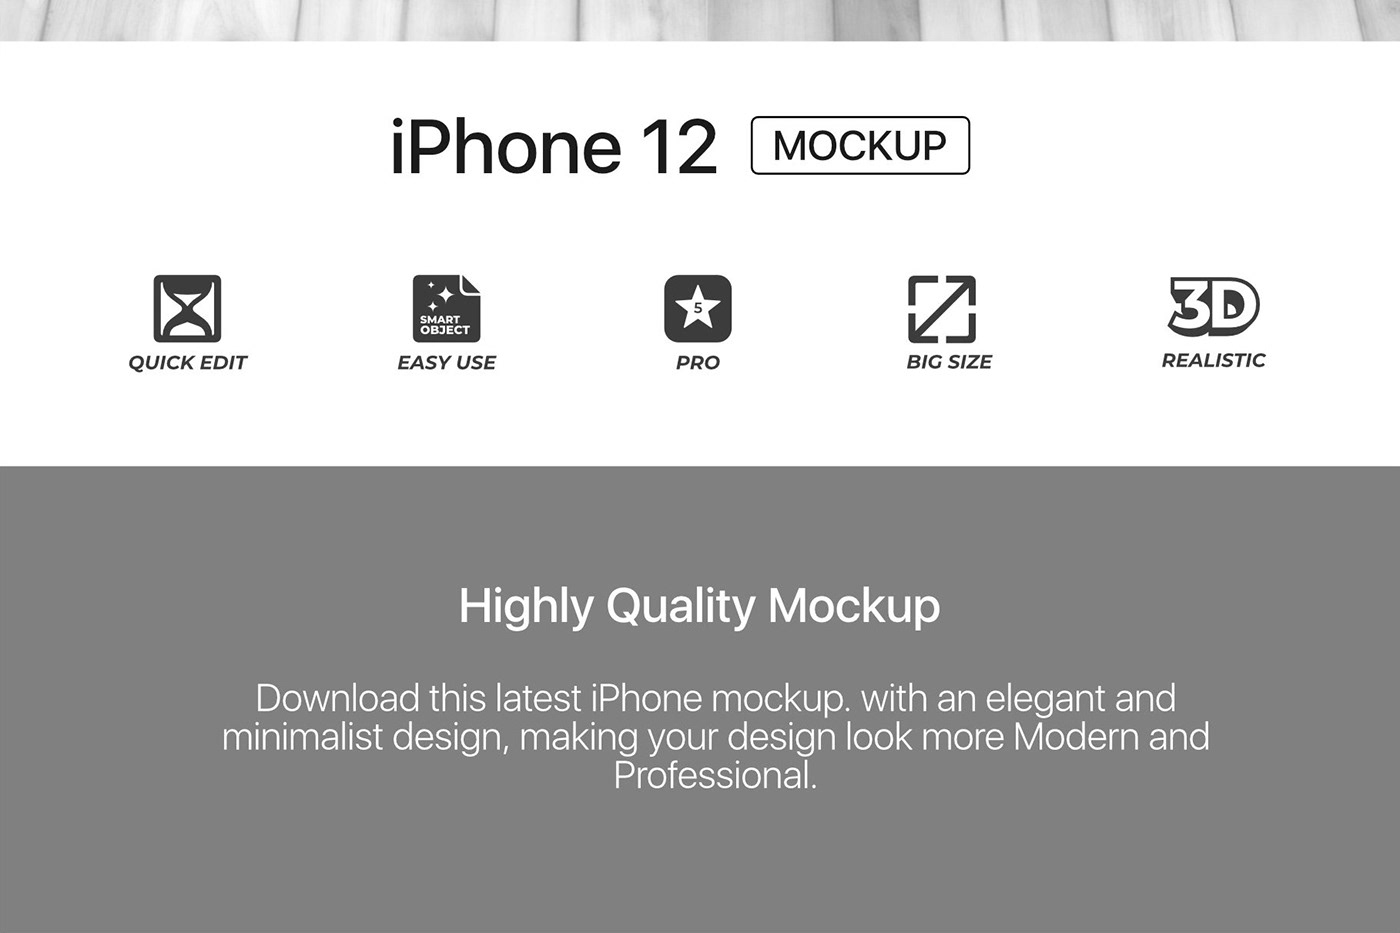 Apple device free device mockup IPHONE 12 Mockup mockup 2020 Screen mockup showcase mockup smartphone mockup ui ux web presentation